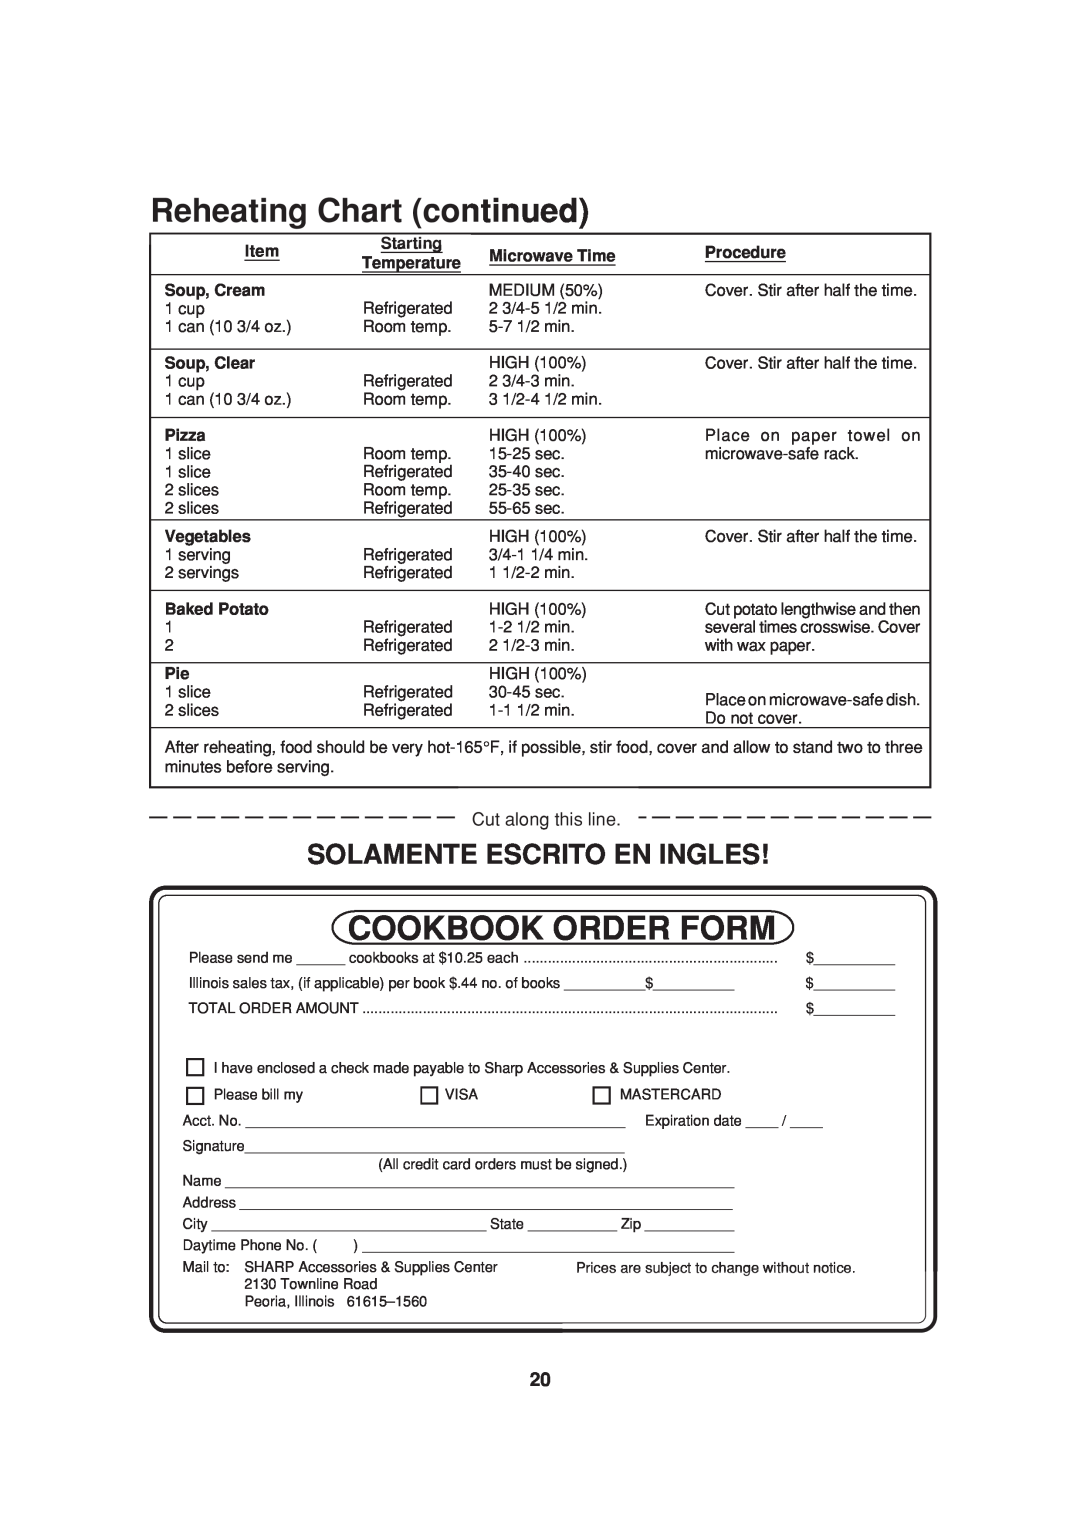 Sharp R-310A, R-312A, R-305A, R-308A, R-309B Reheating Chart continued, Cookbook Order Form, Solamente Escrito En Ingles 